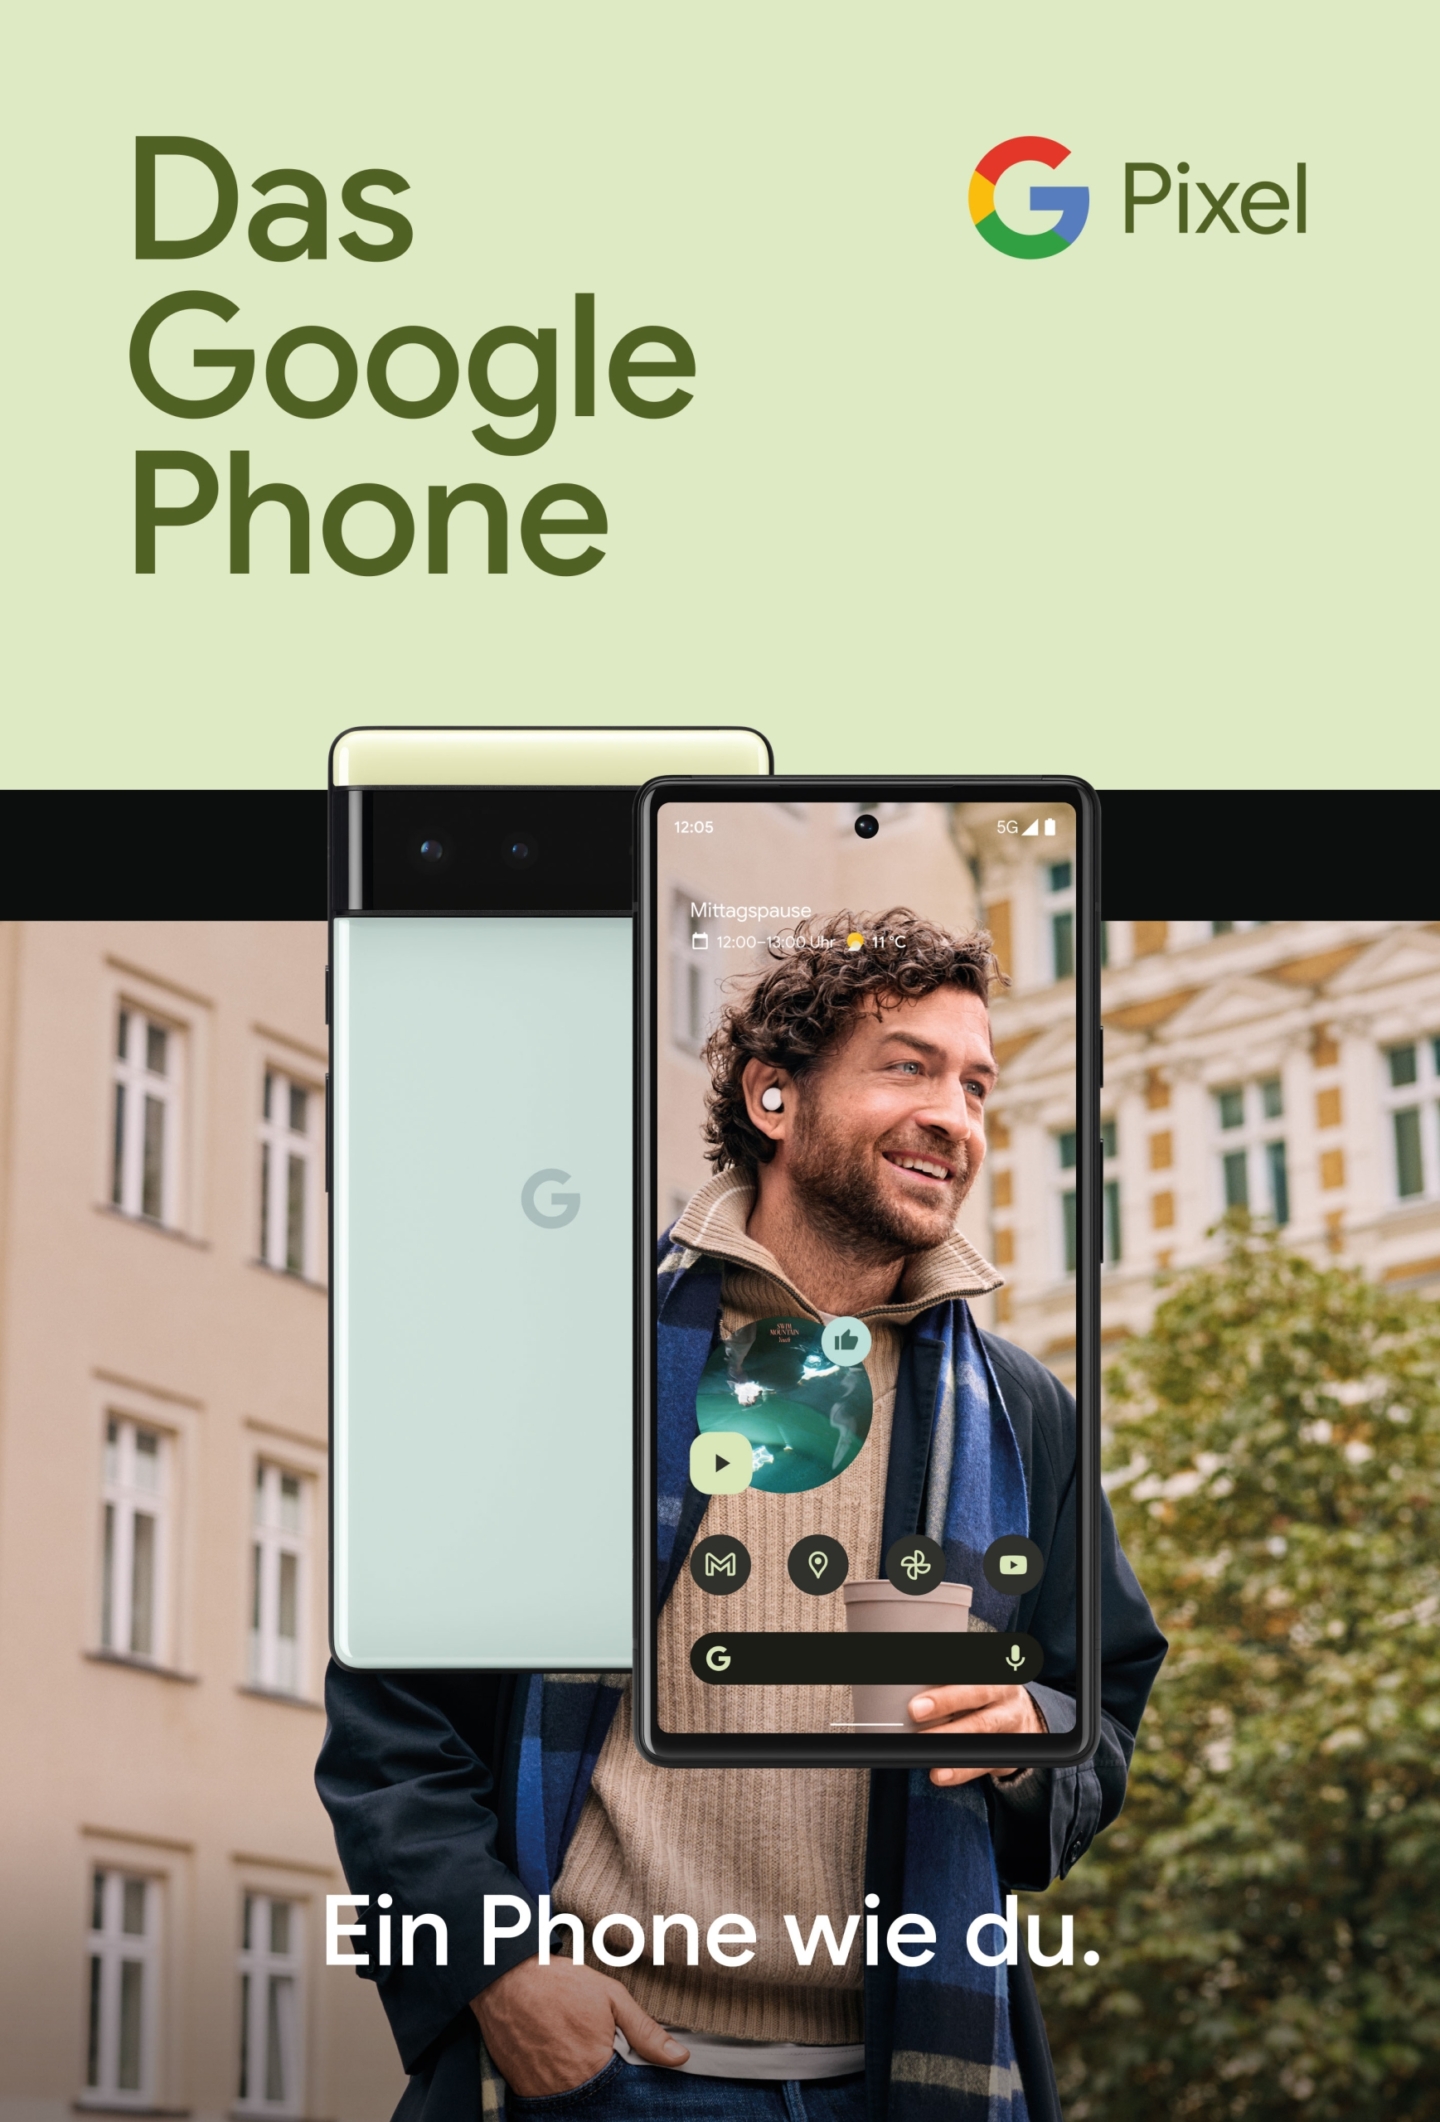 Google Pixel6